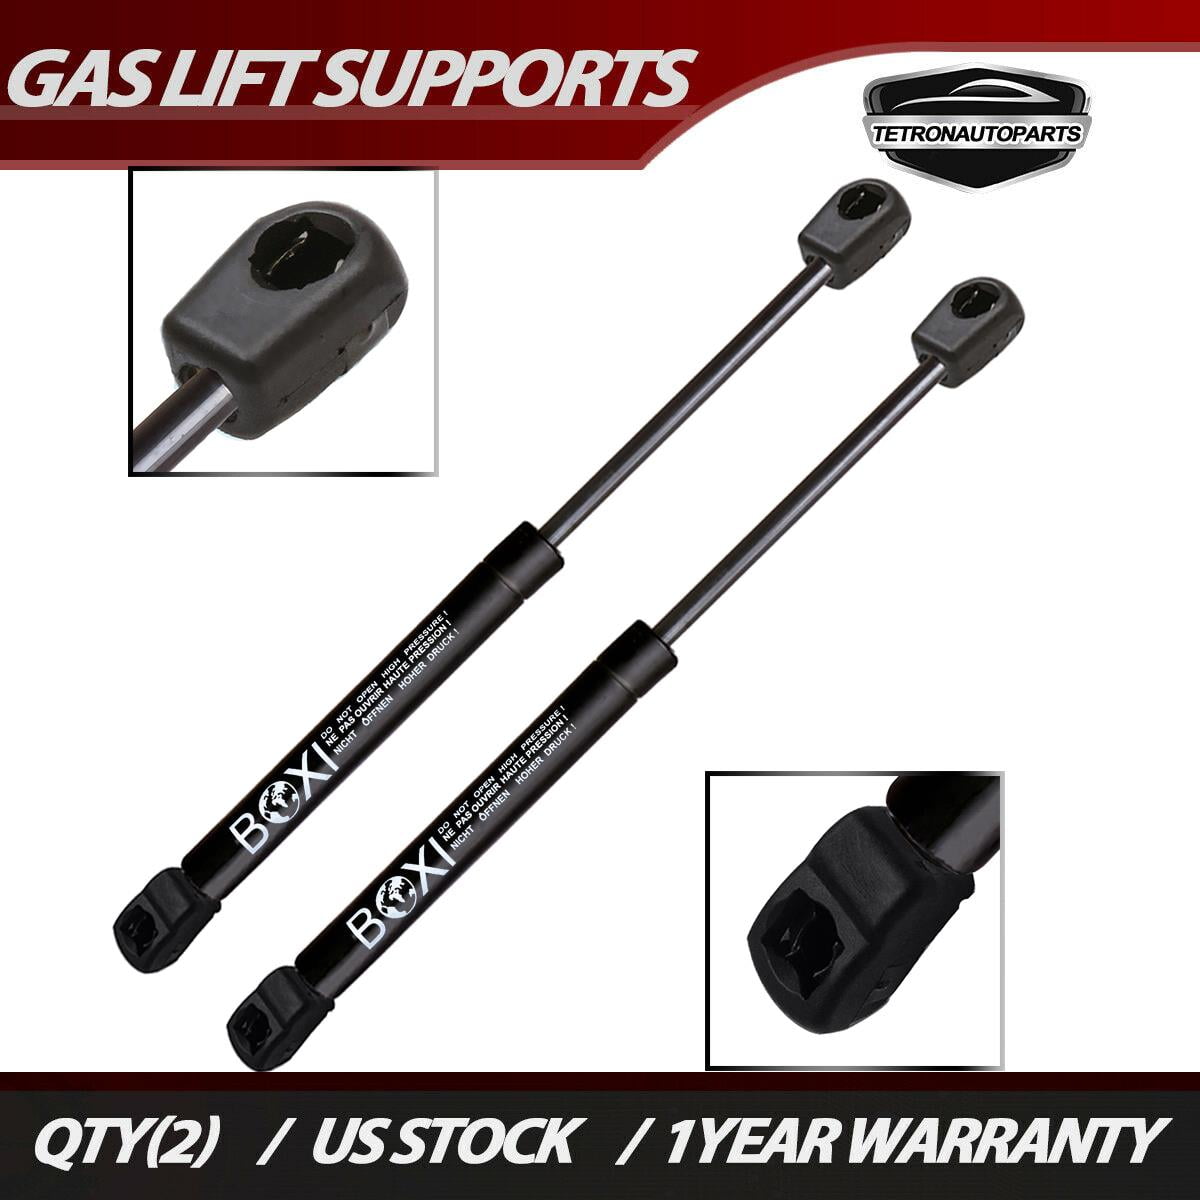 Set of 2 Tailgate Liftgate Lift Support struts Gas Spring Shock for 2008-2015 Chevrolet Captiva Sport Saturn Vue 